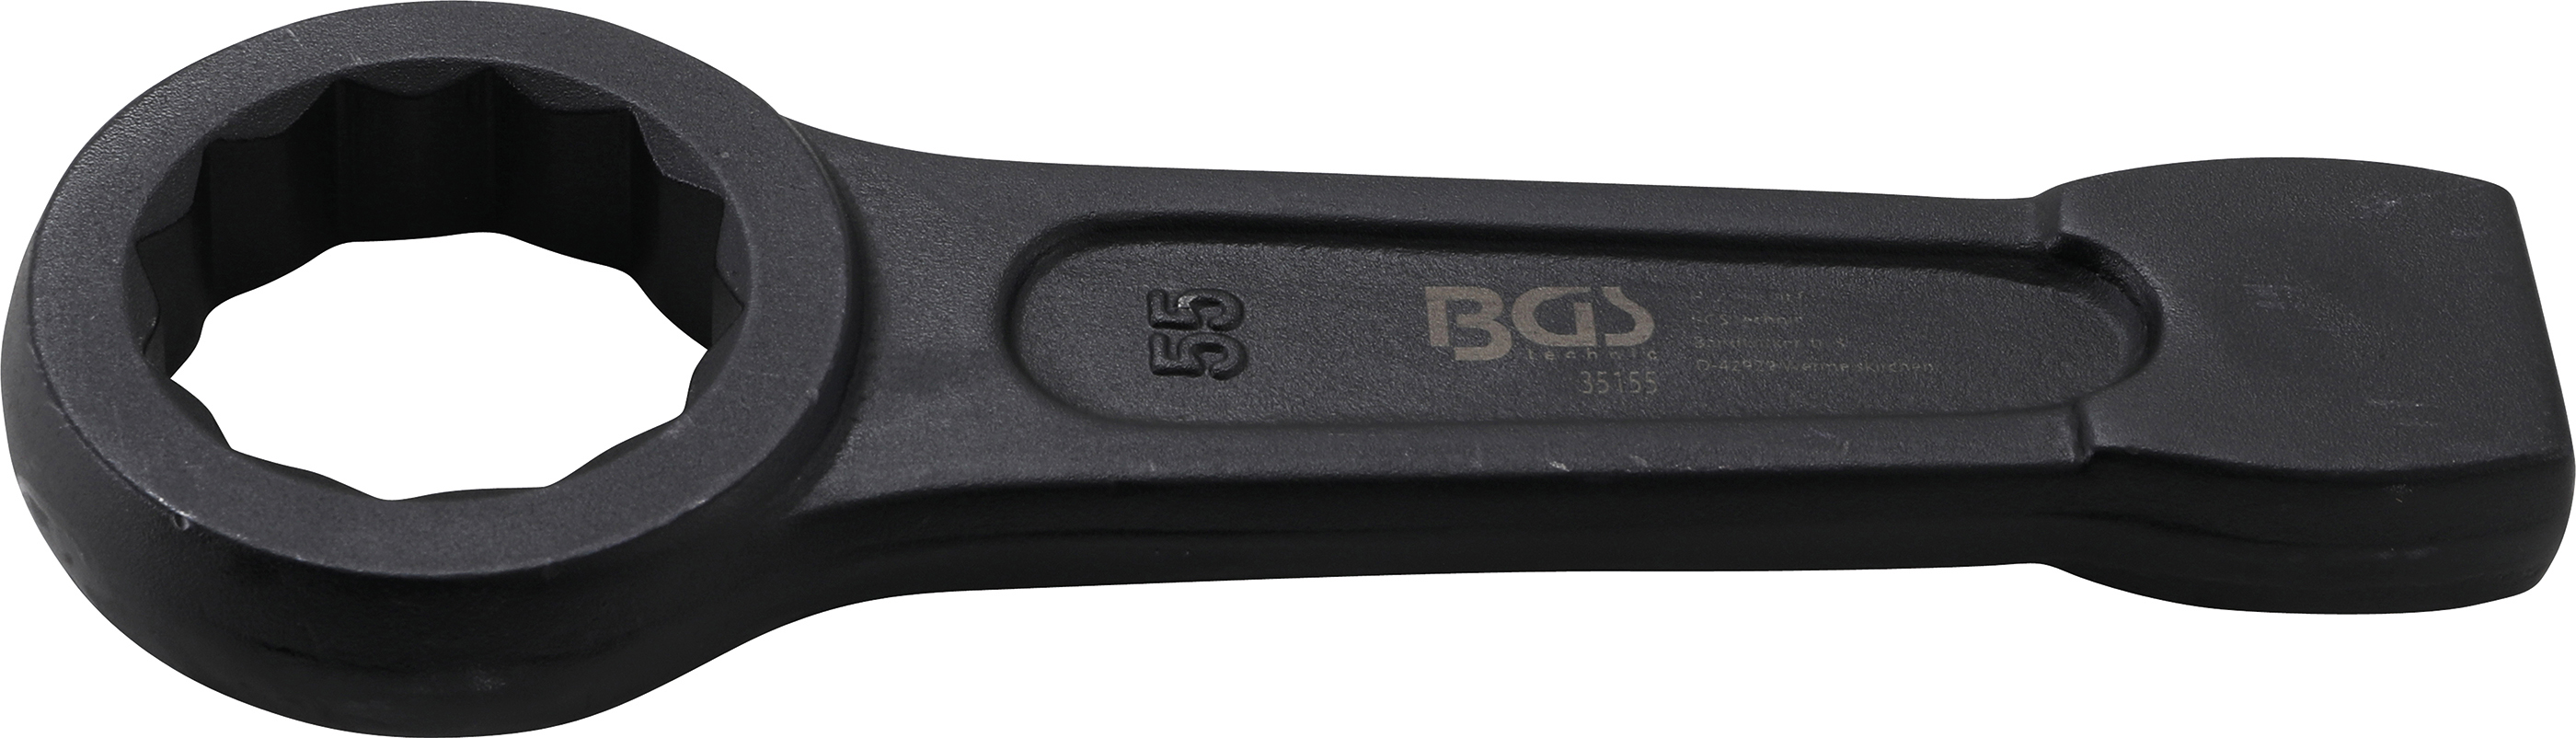 BGS Schlag-Ringschlüssel | SW 55 mm